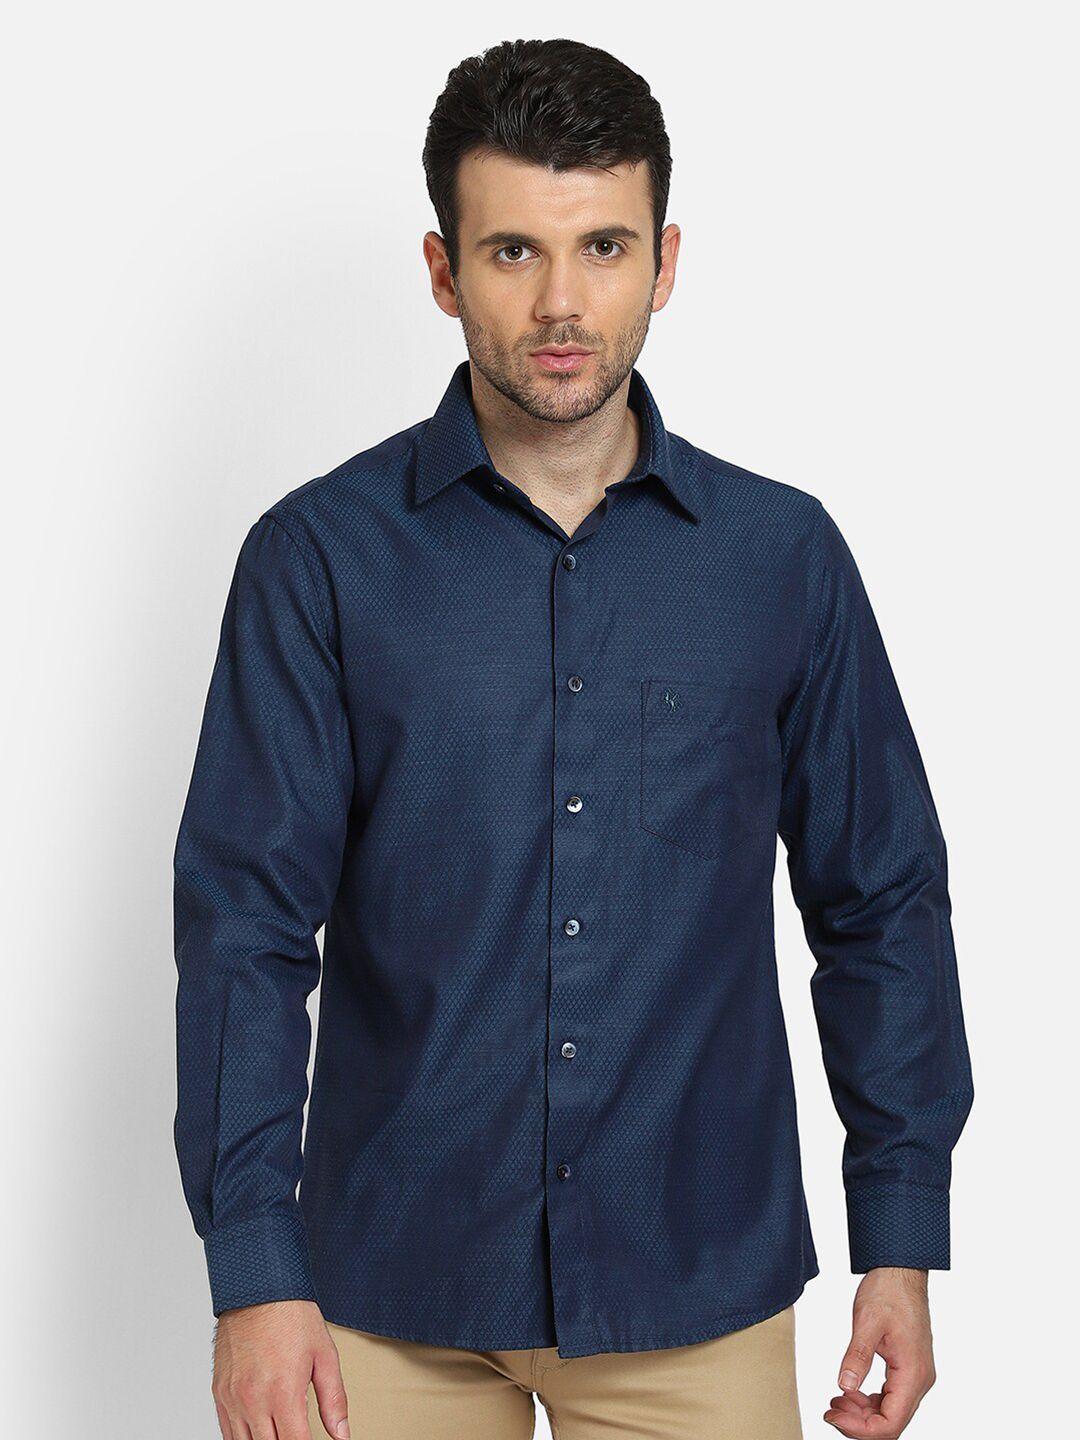 cantabil-men-navy-blue-solid-casual-shirt